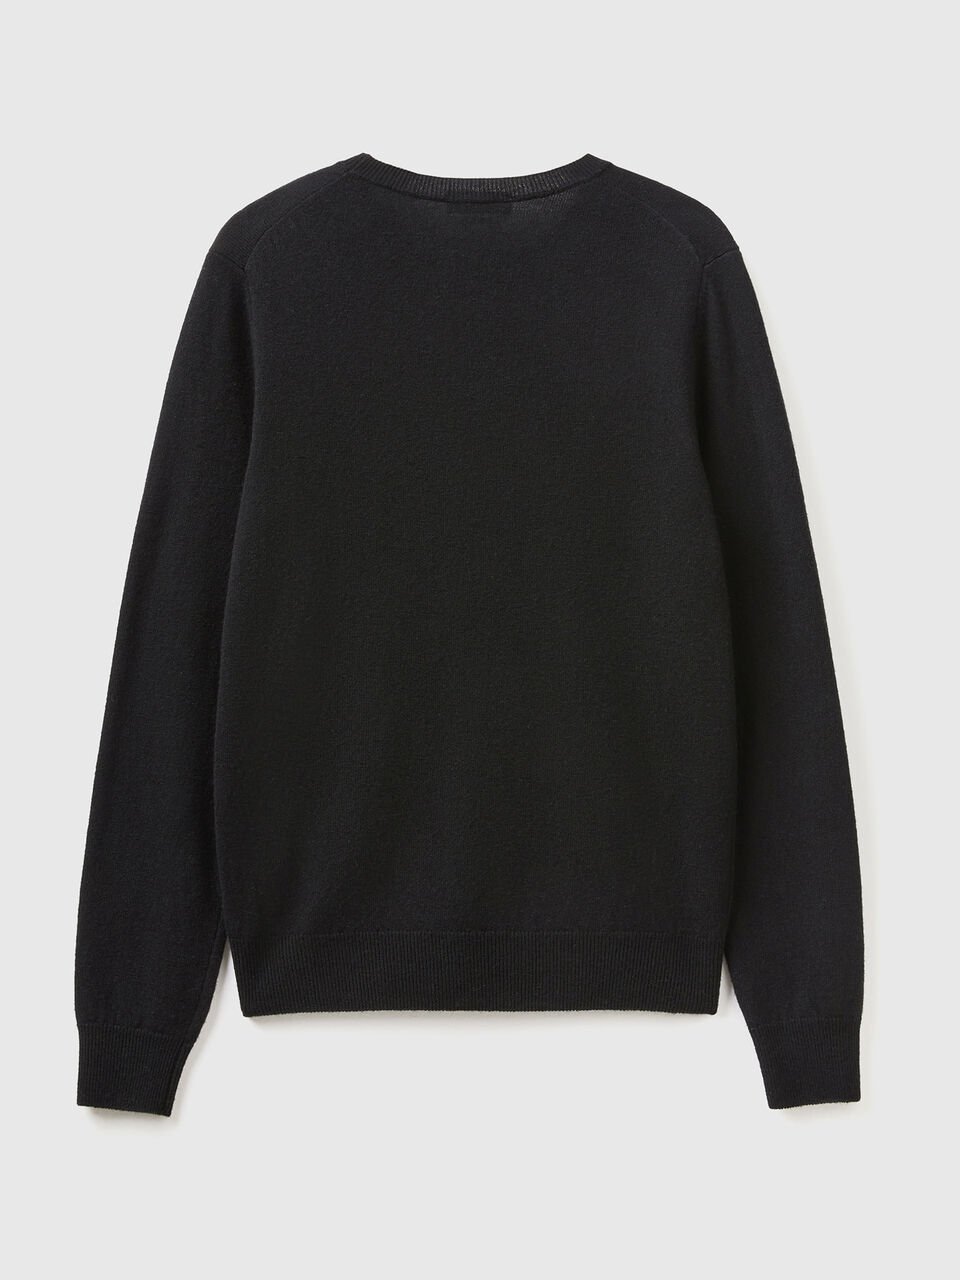 Black crew neck sweater in Merino wool - Black